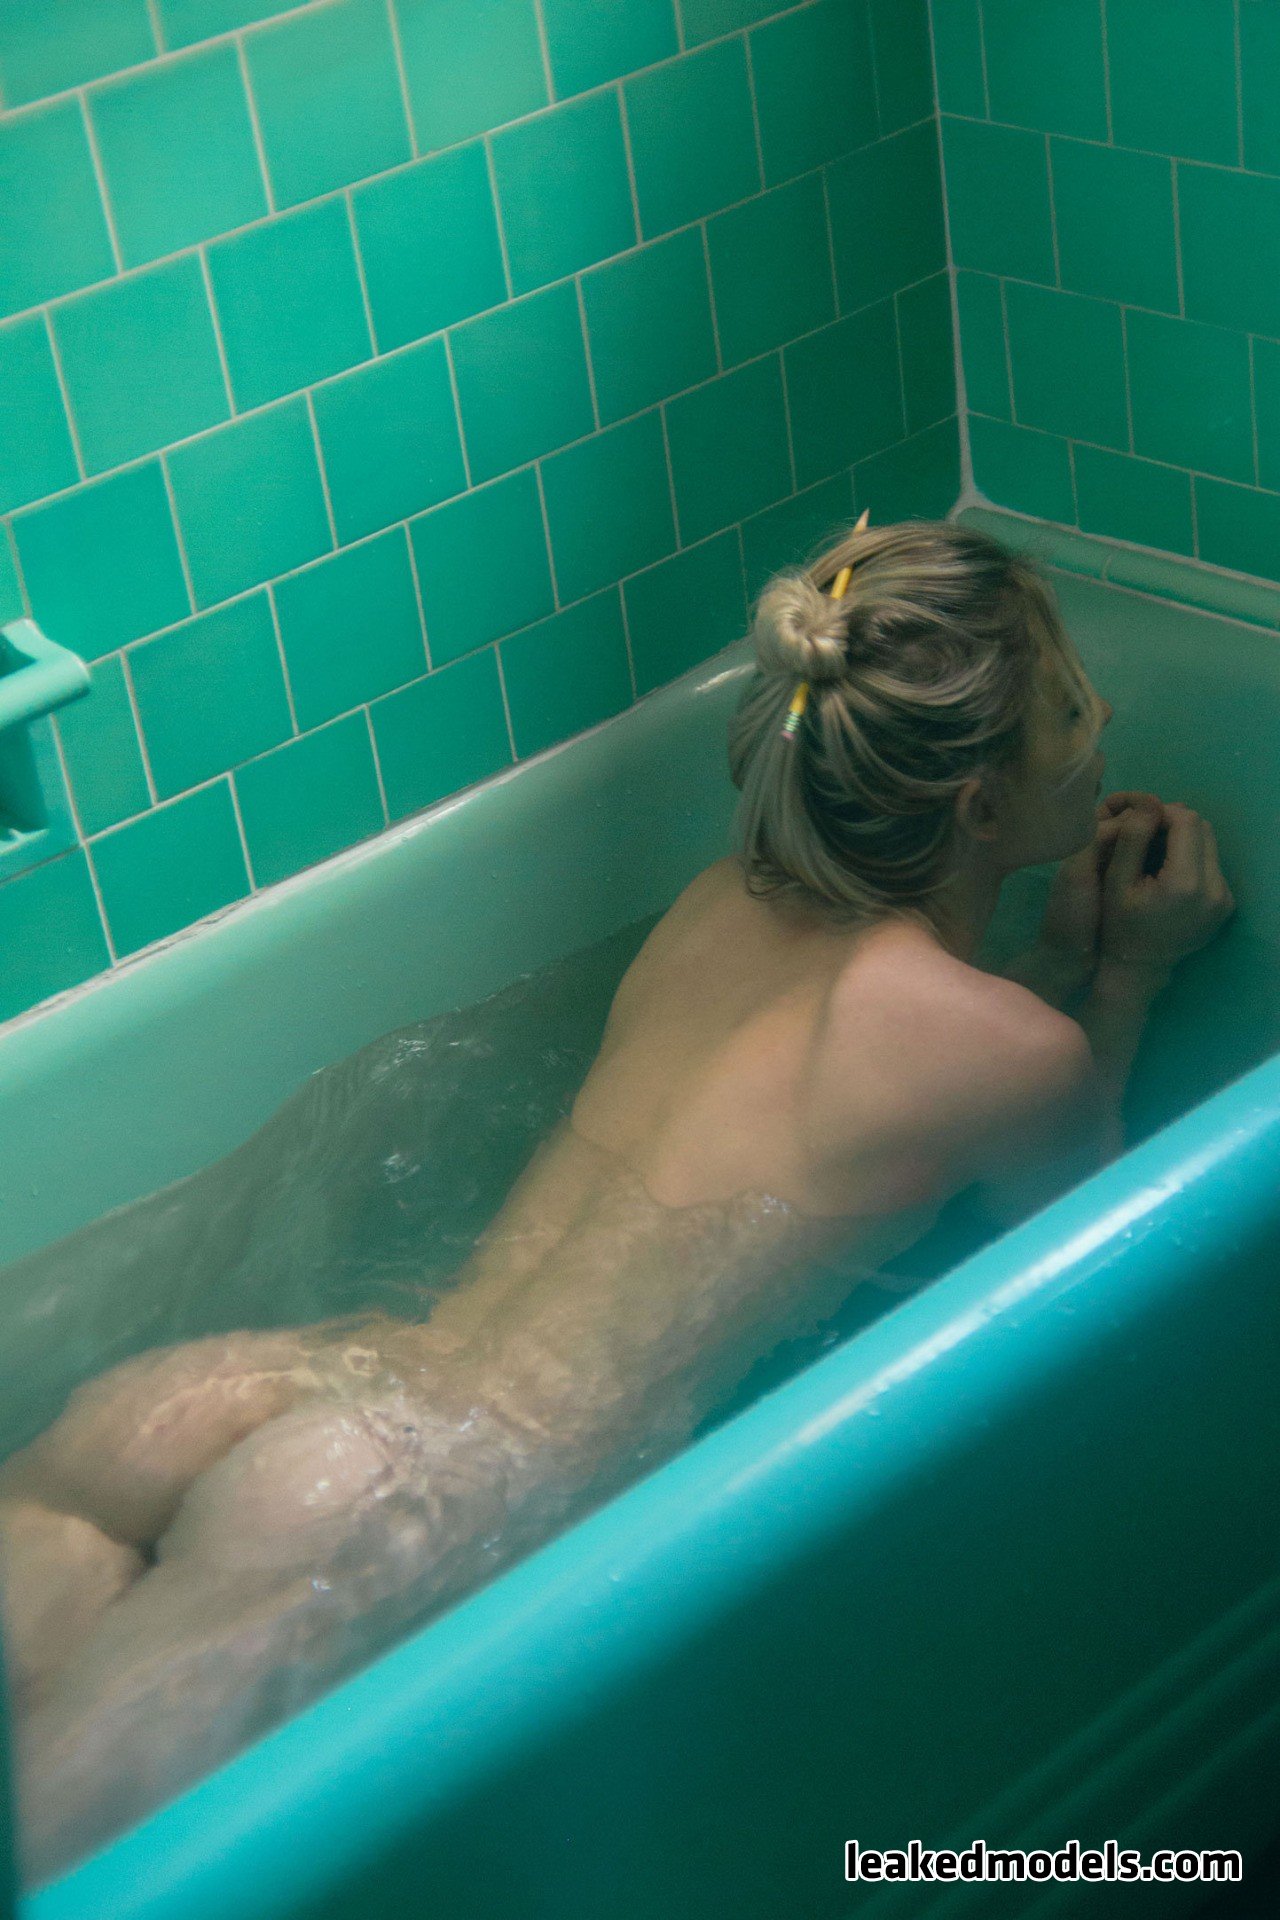 lauren bonner   laurenbonnerofficial leaked nude leakedmodels.com 0014 1 - Lauren Bonner – laurenbonnerofficial Instagram Nude Leaks (25 Photos)